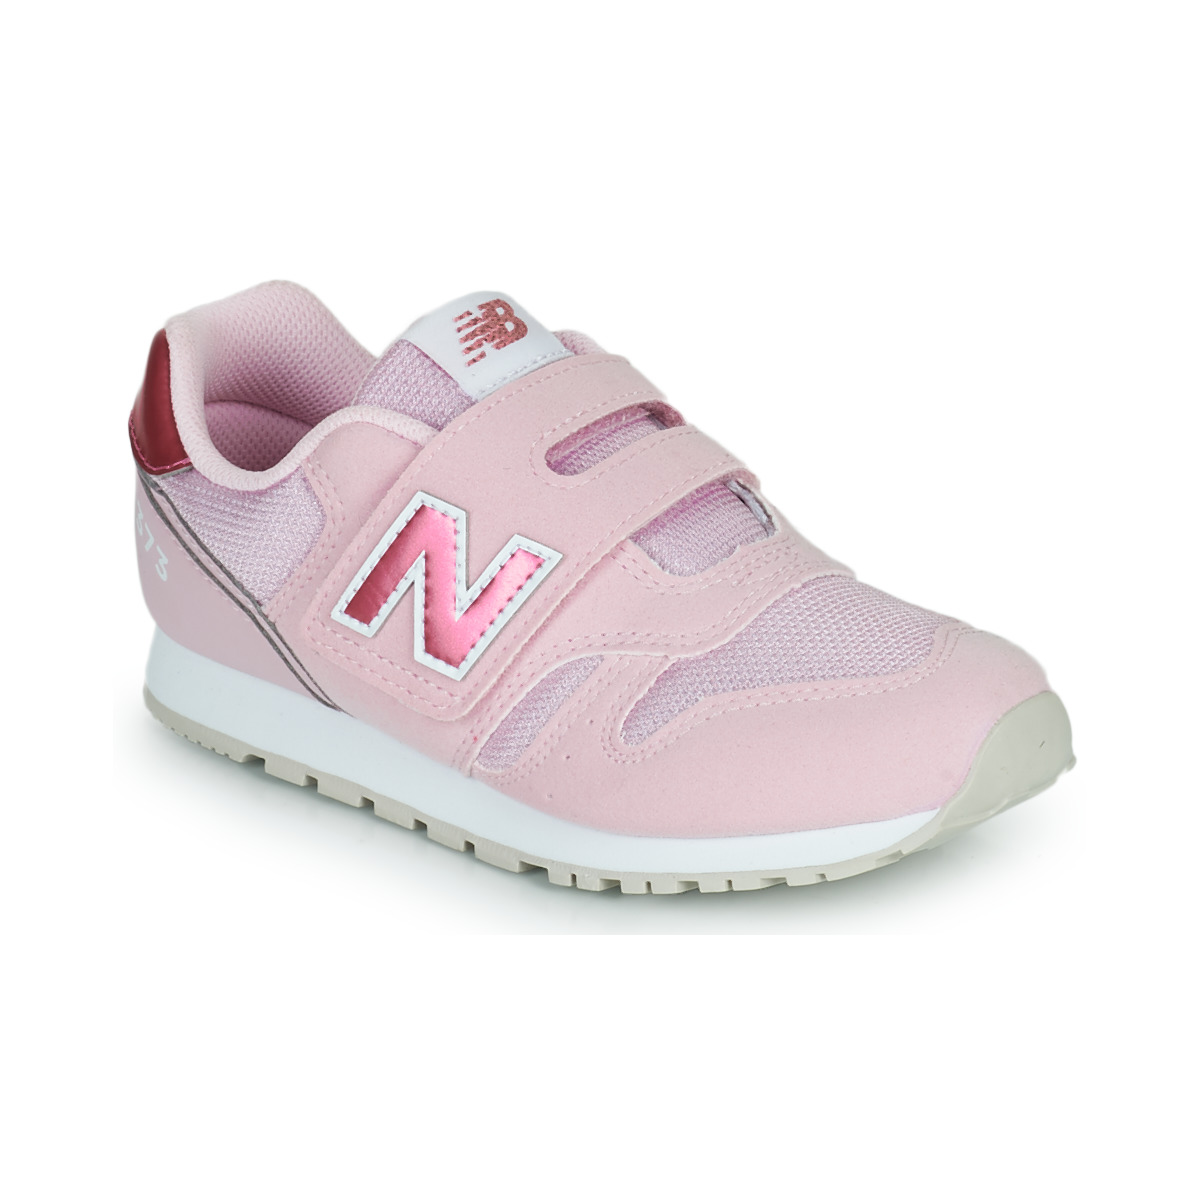 Skor Flickor Sneakers New Balance 373 Rosa